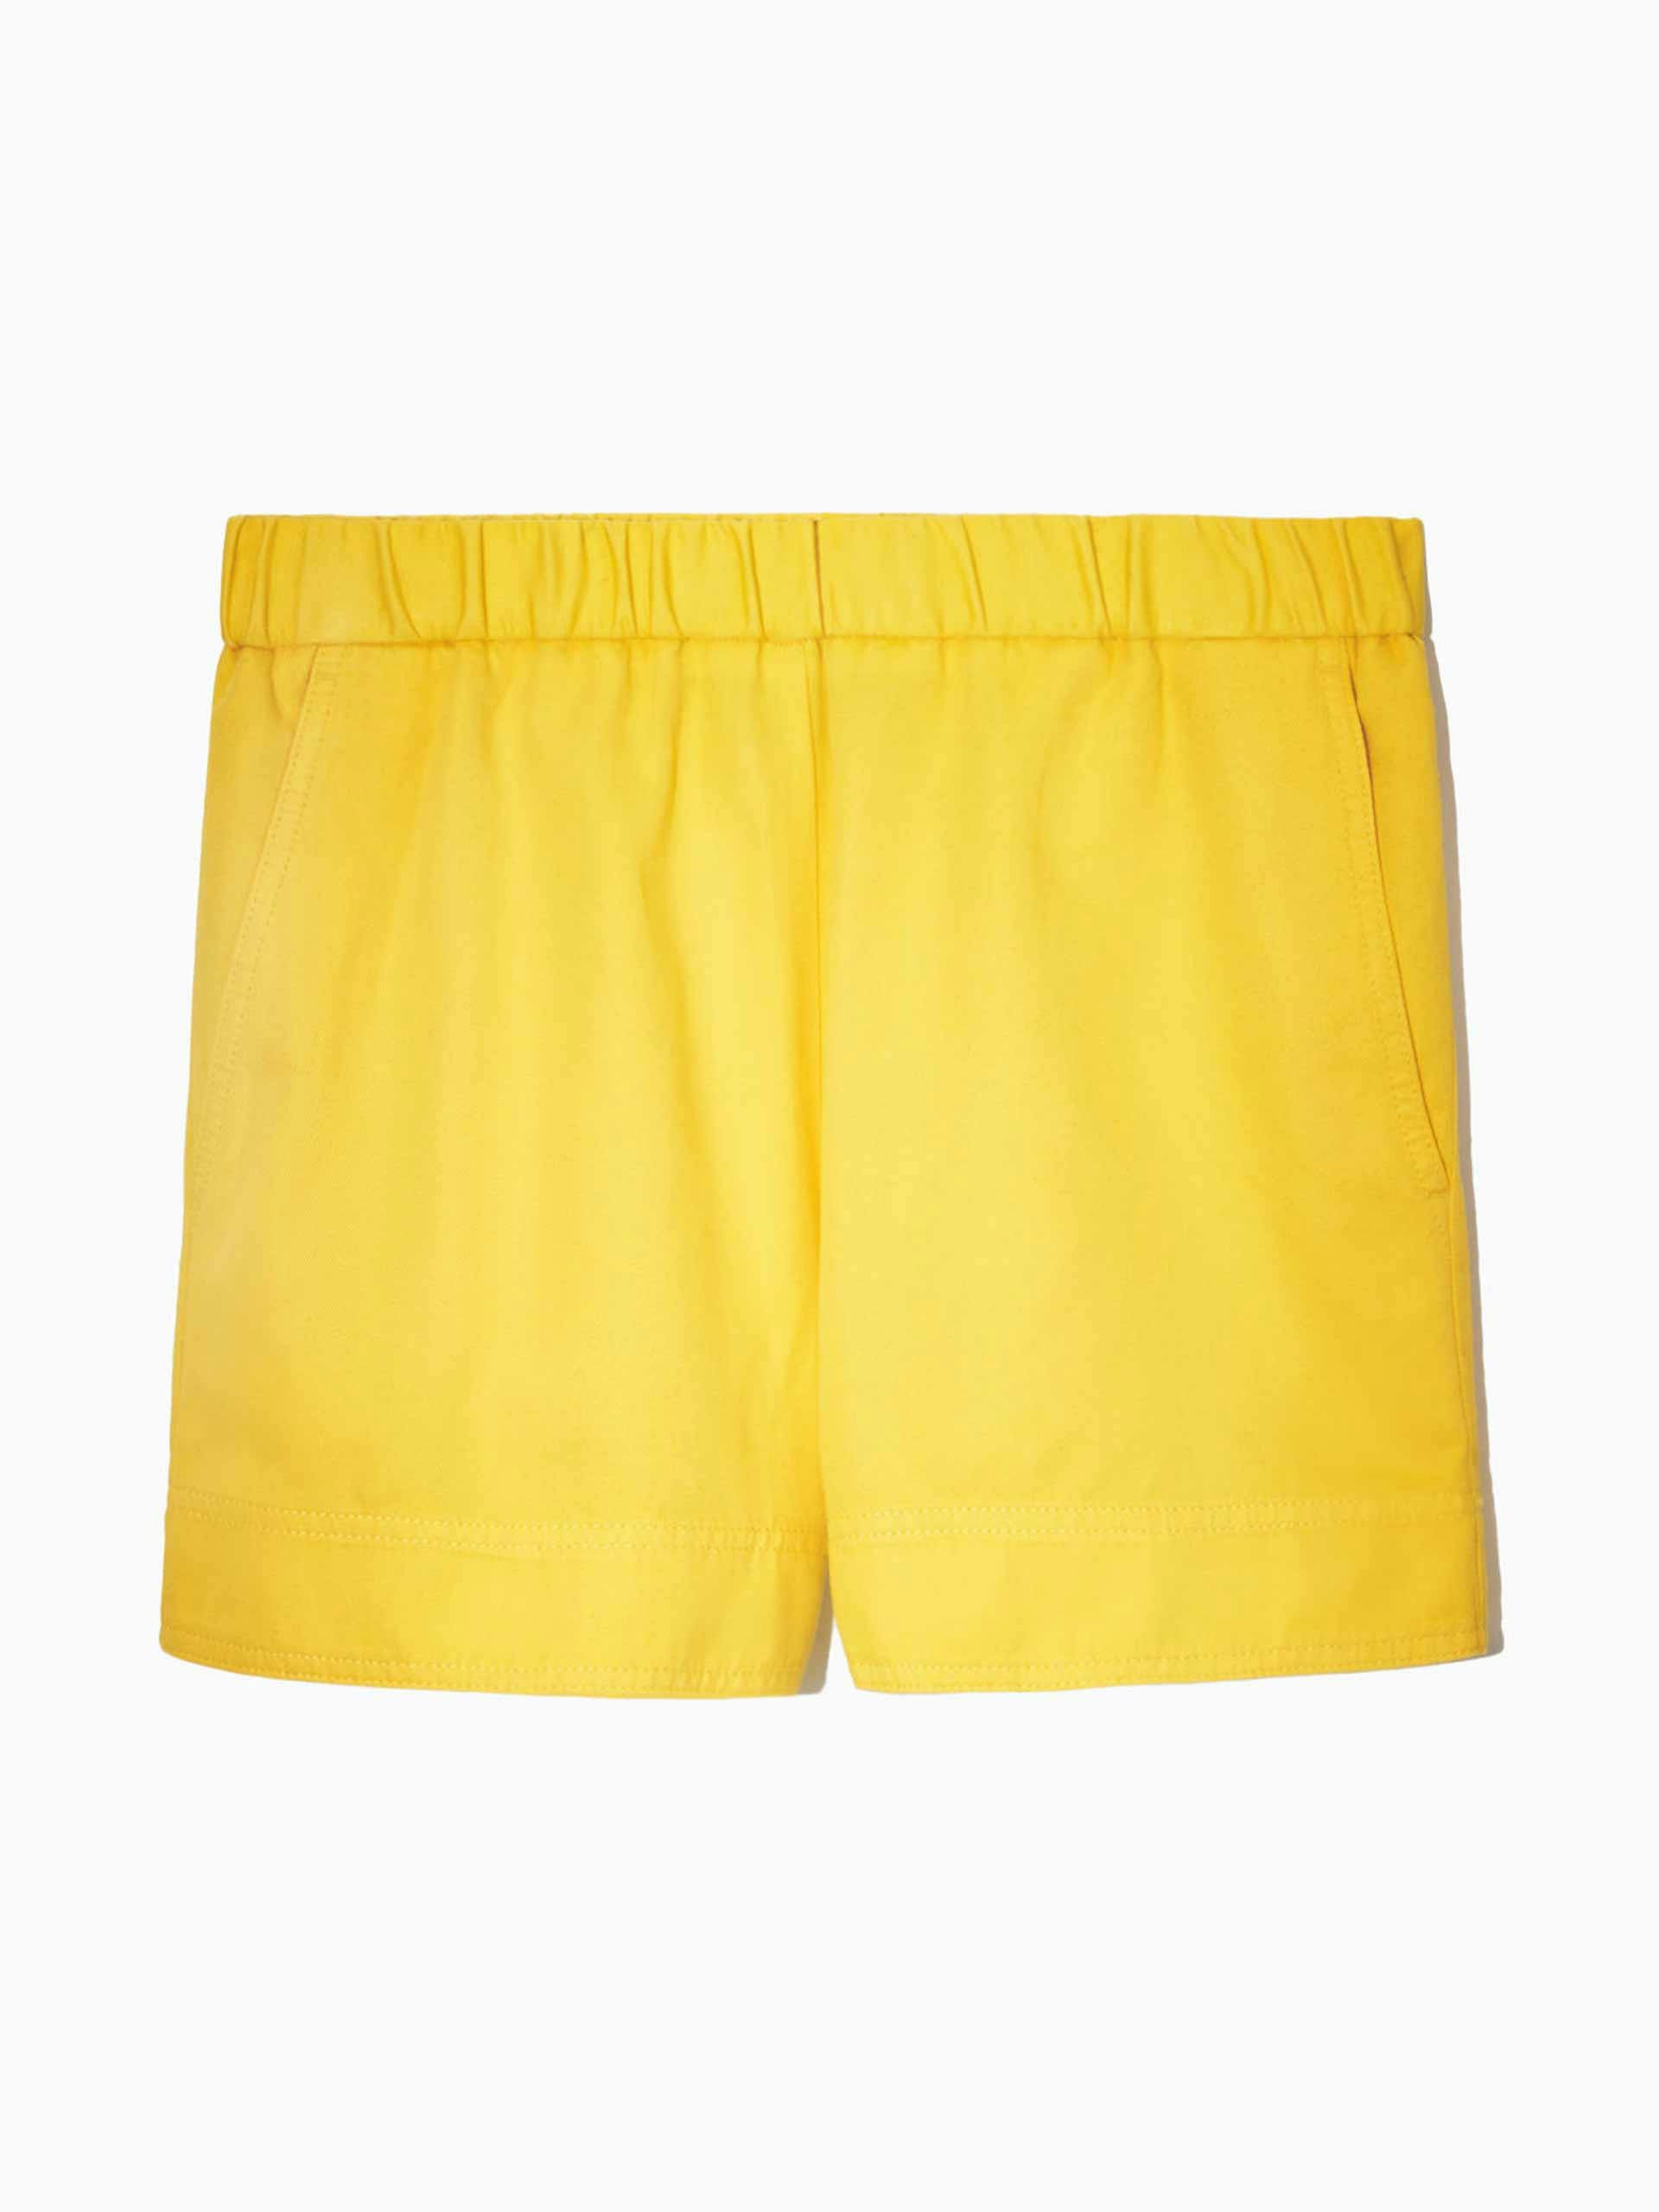 Yellow elasticated waist shorts